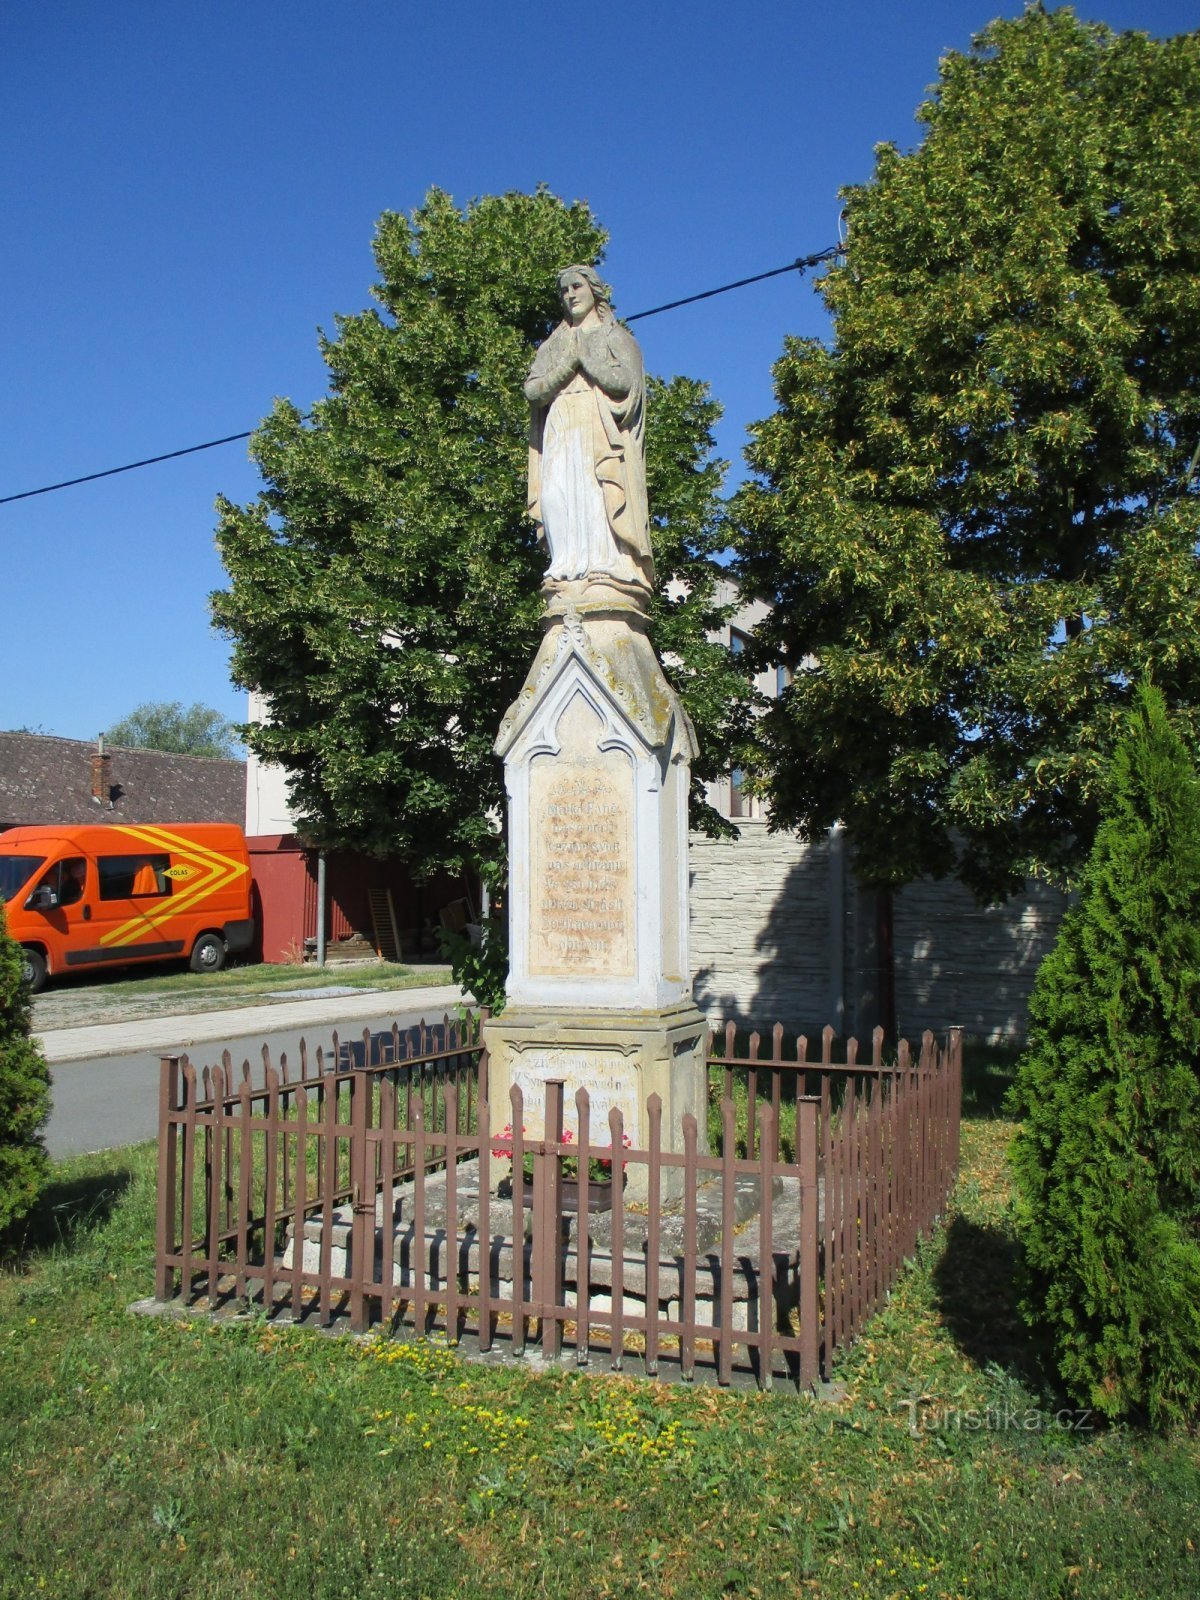 Statue of the Virgin Mary (Podoliby, 29.6.2019/XNUMX/XNUMX)